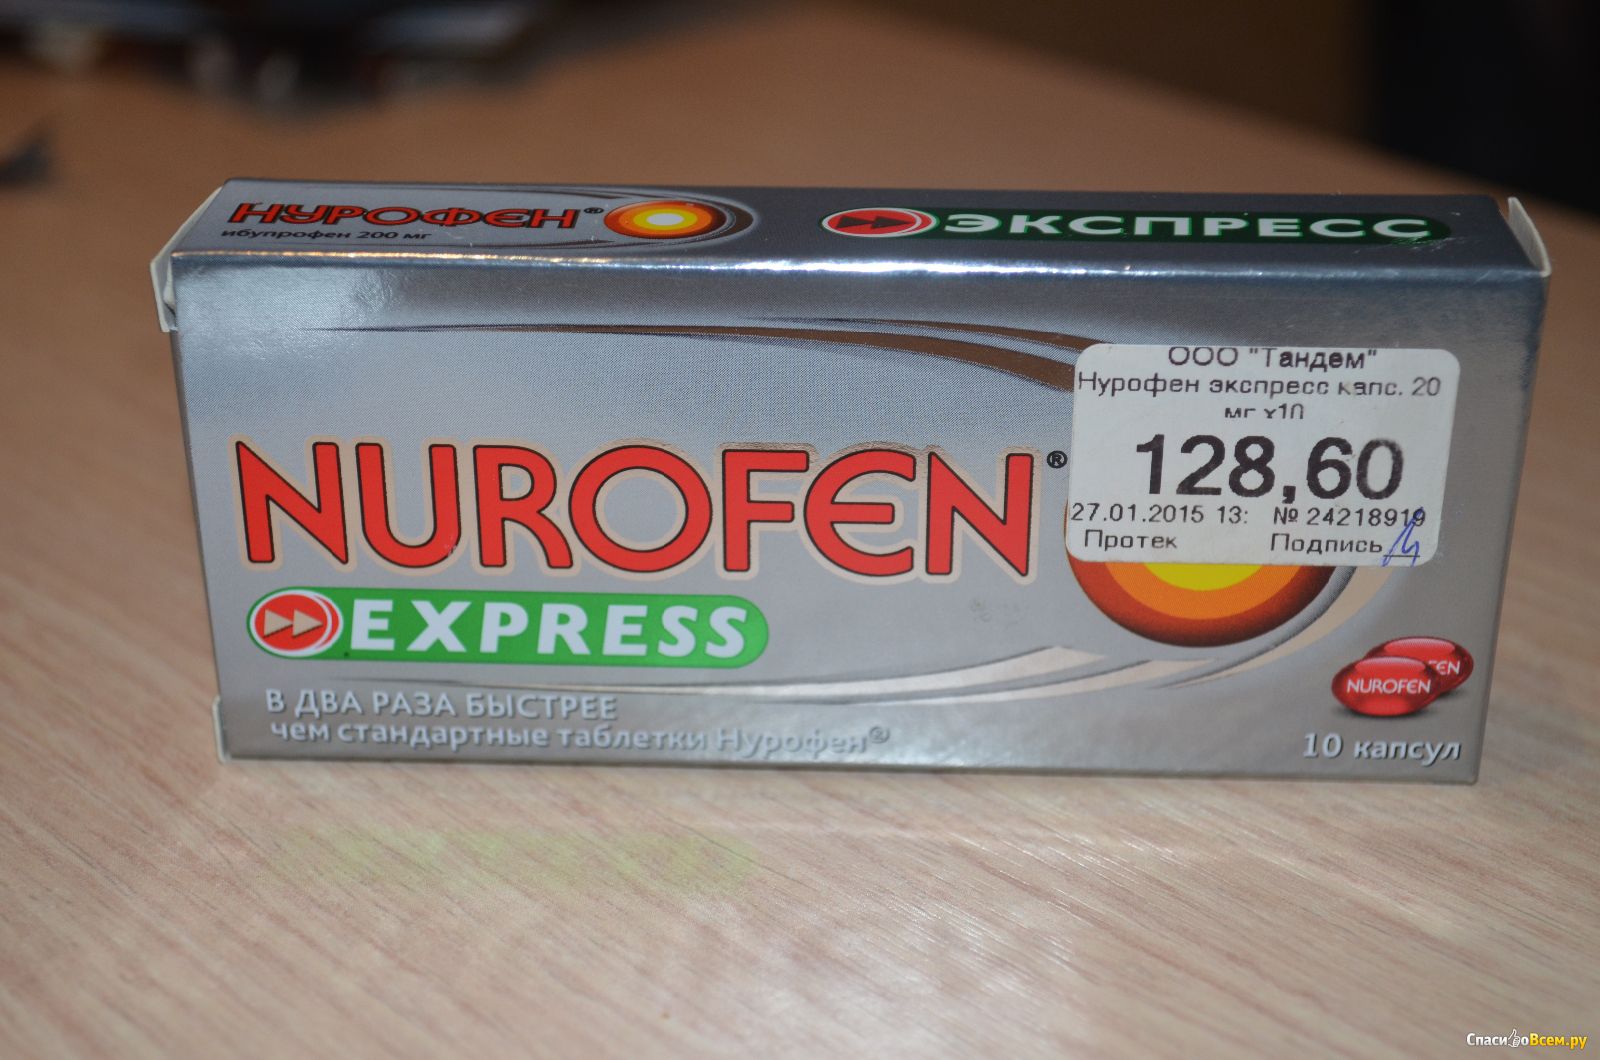 Какую таблетку нурофен. Нурофен 400 мг капсулы. Обезболивающие таблетки нурофен экспресс. Нурофен красные капсулы. Обезболивающие таблетки нурофен форте.